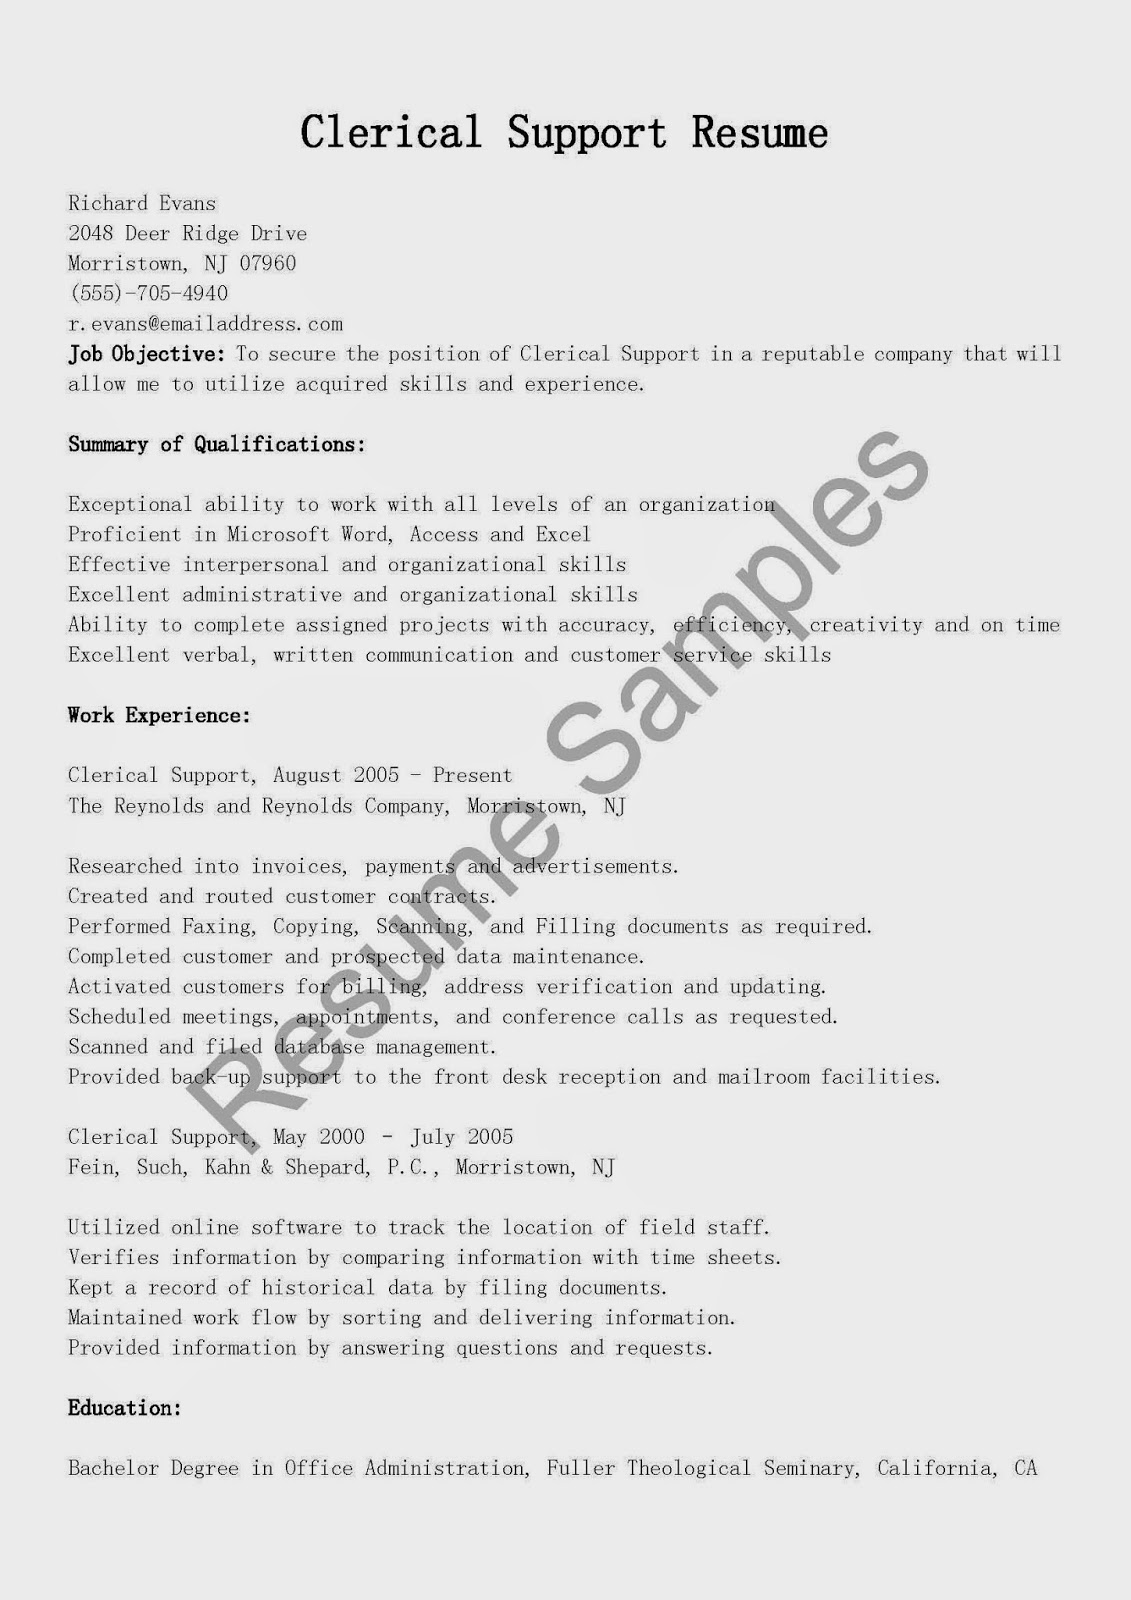 Resume Samples: Clerical Support Resume Sample